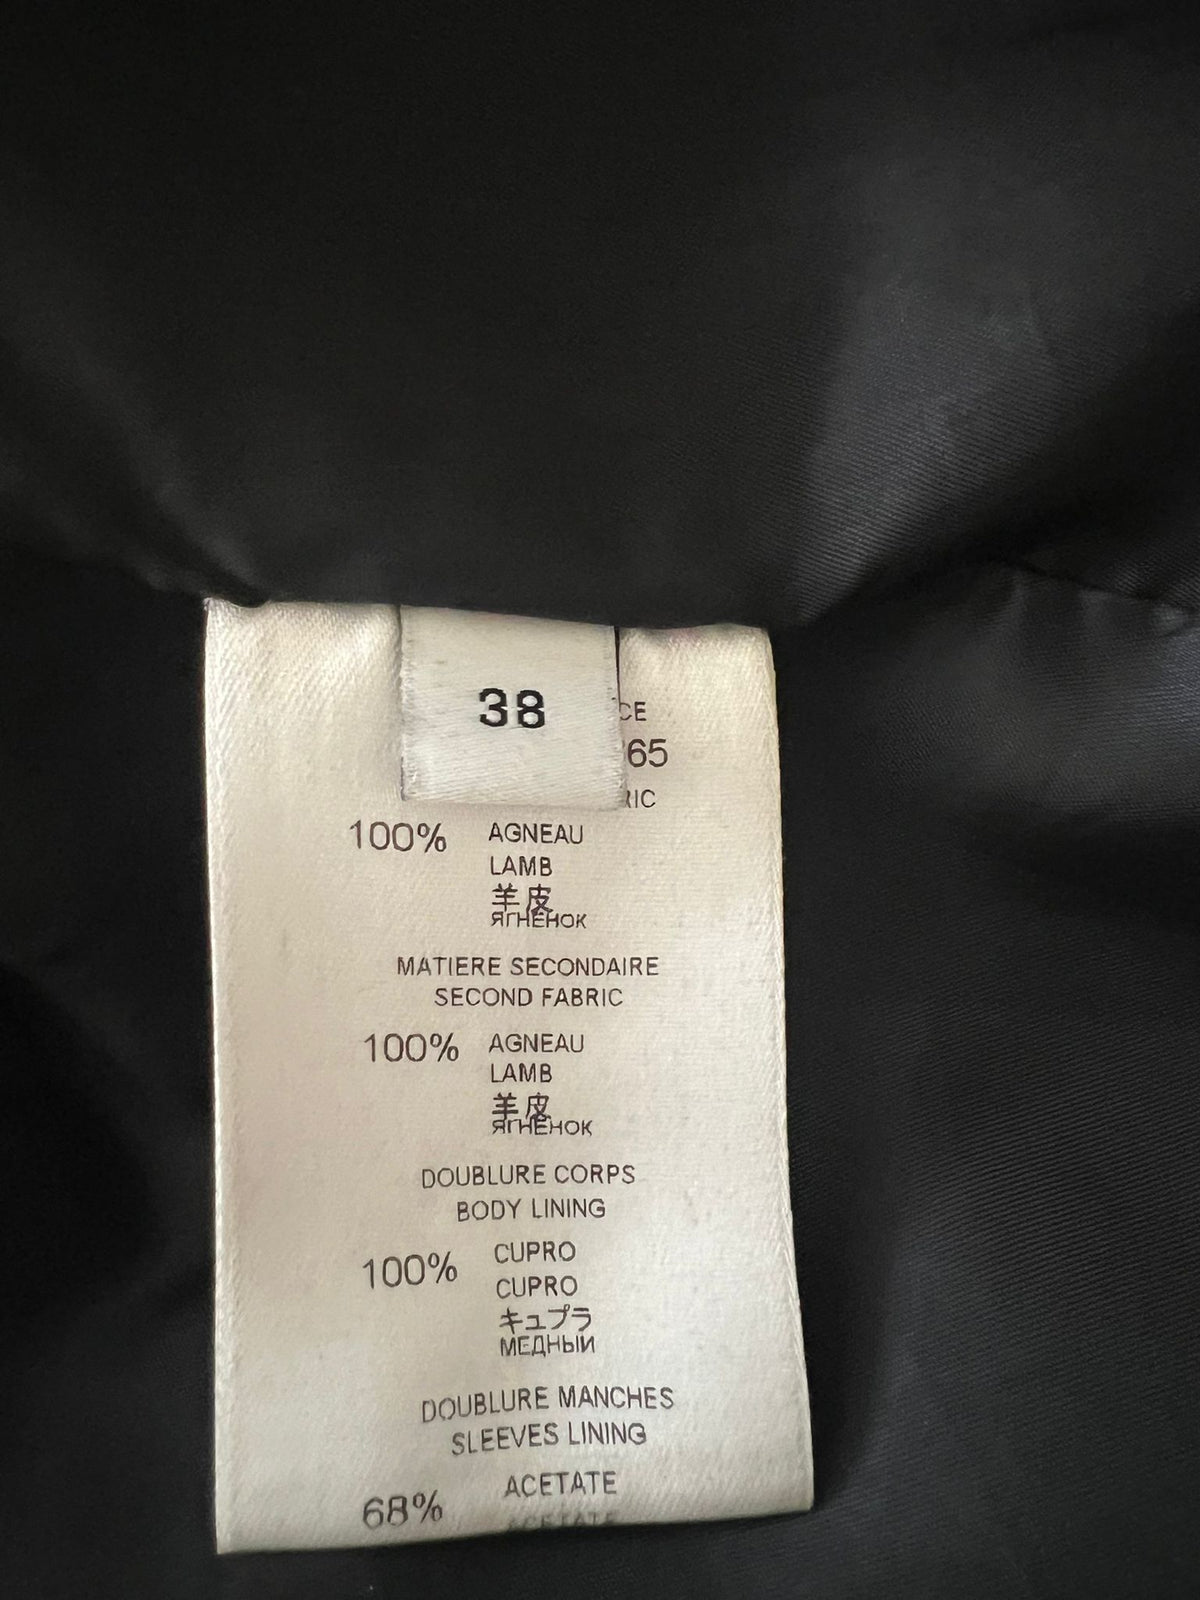 GIVENCHY Black Leather Jacket | Size 38 FR